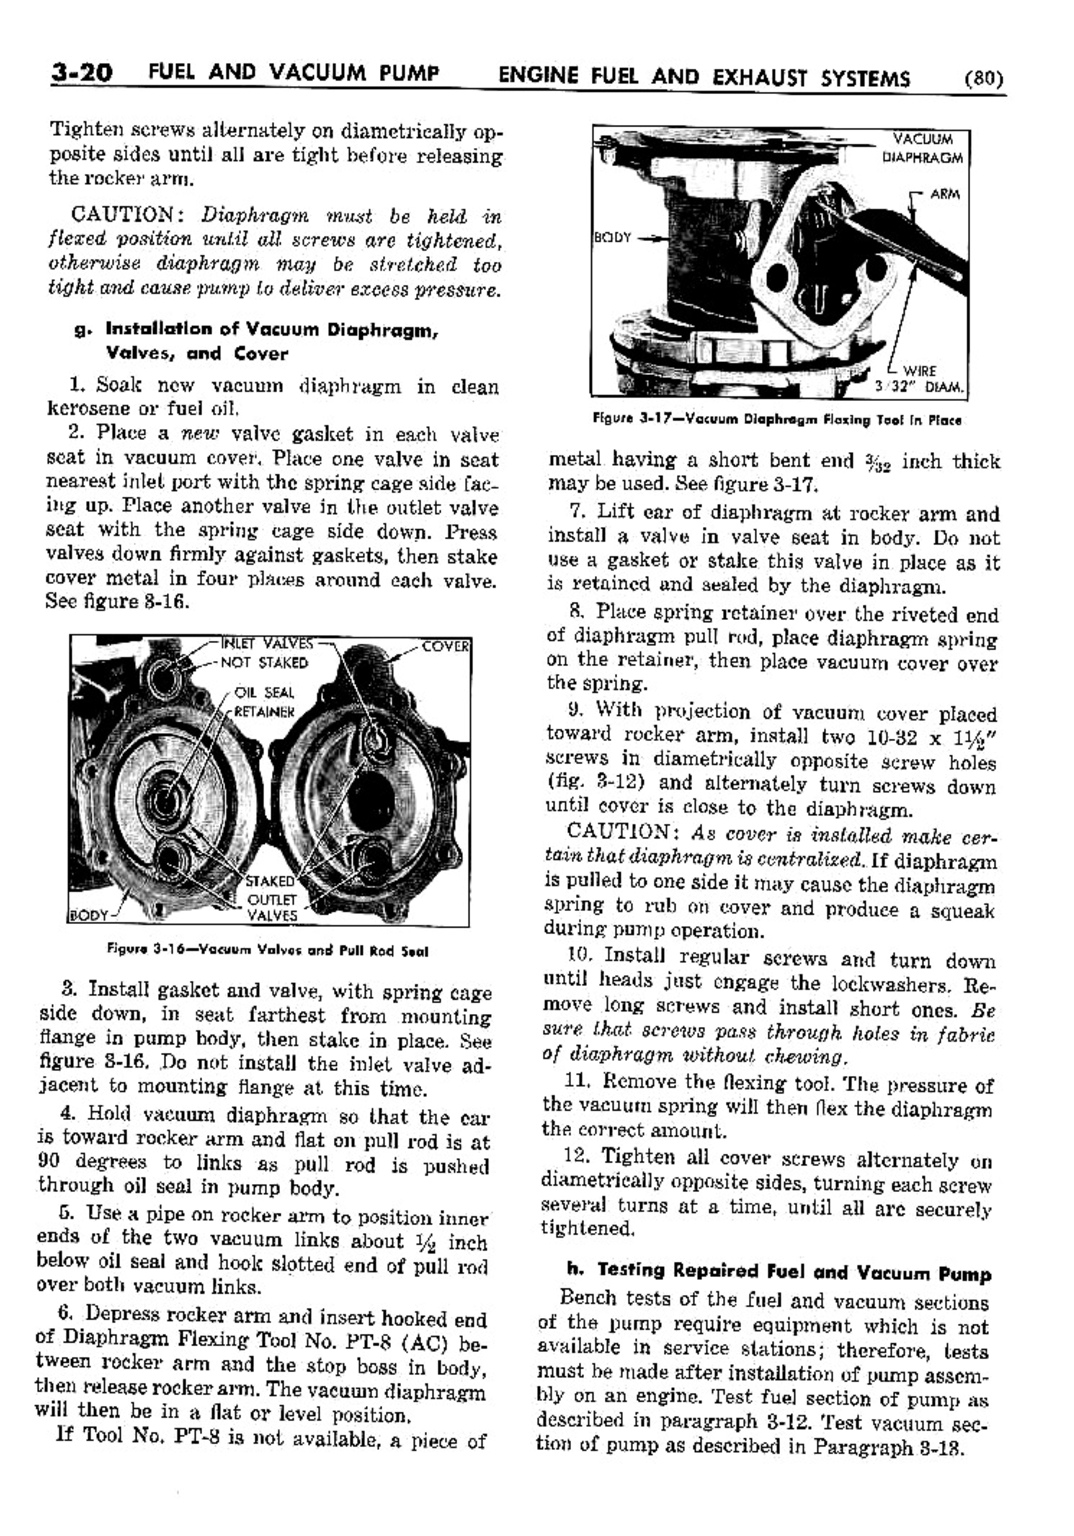 n_04 1953 Buick Shop Manual - Engine Fuel & Exhaust-020-020.jpg